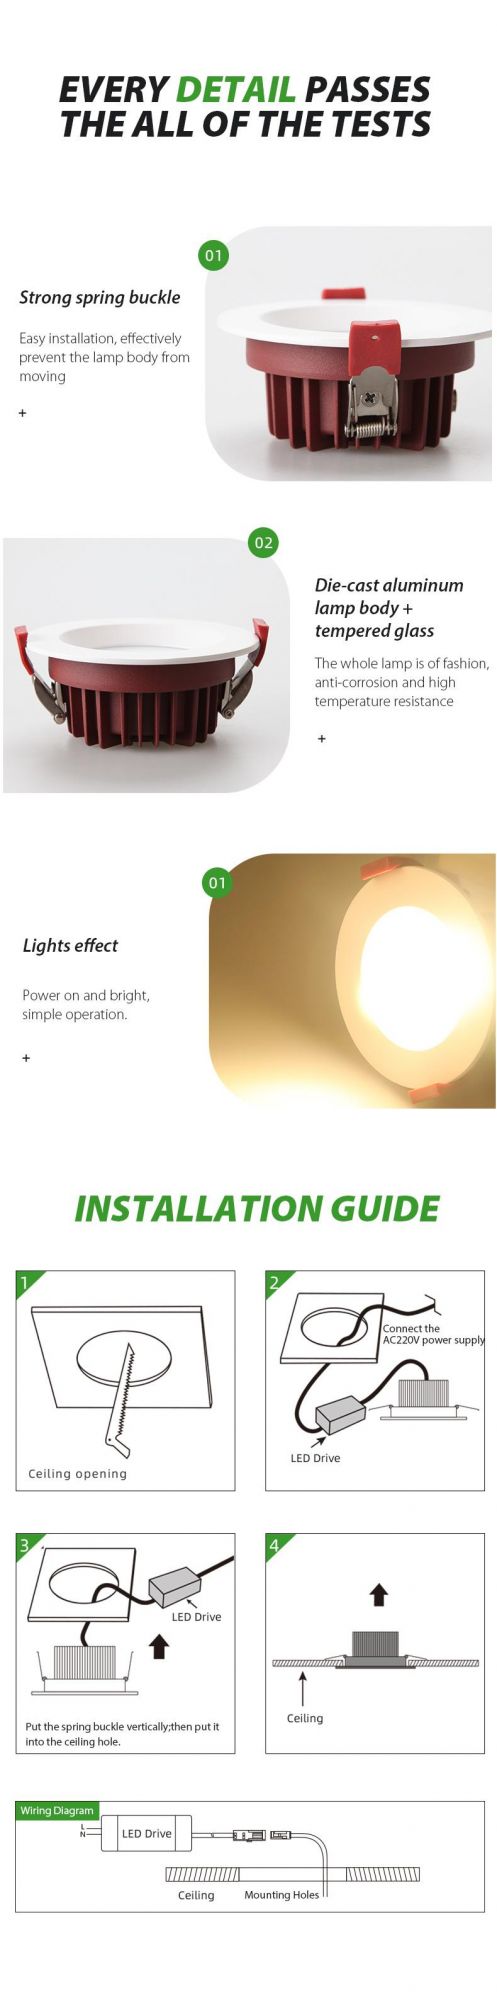 COB AC220-240V Ceiling Recessed Downlight Round Slim Panel Light 10W LED Downlight Home Store Use (WF-LDL-MR-10W)